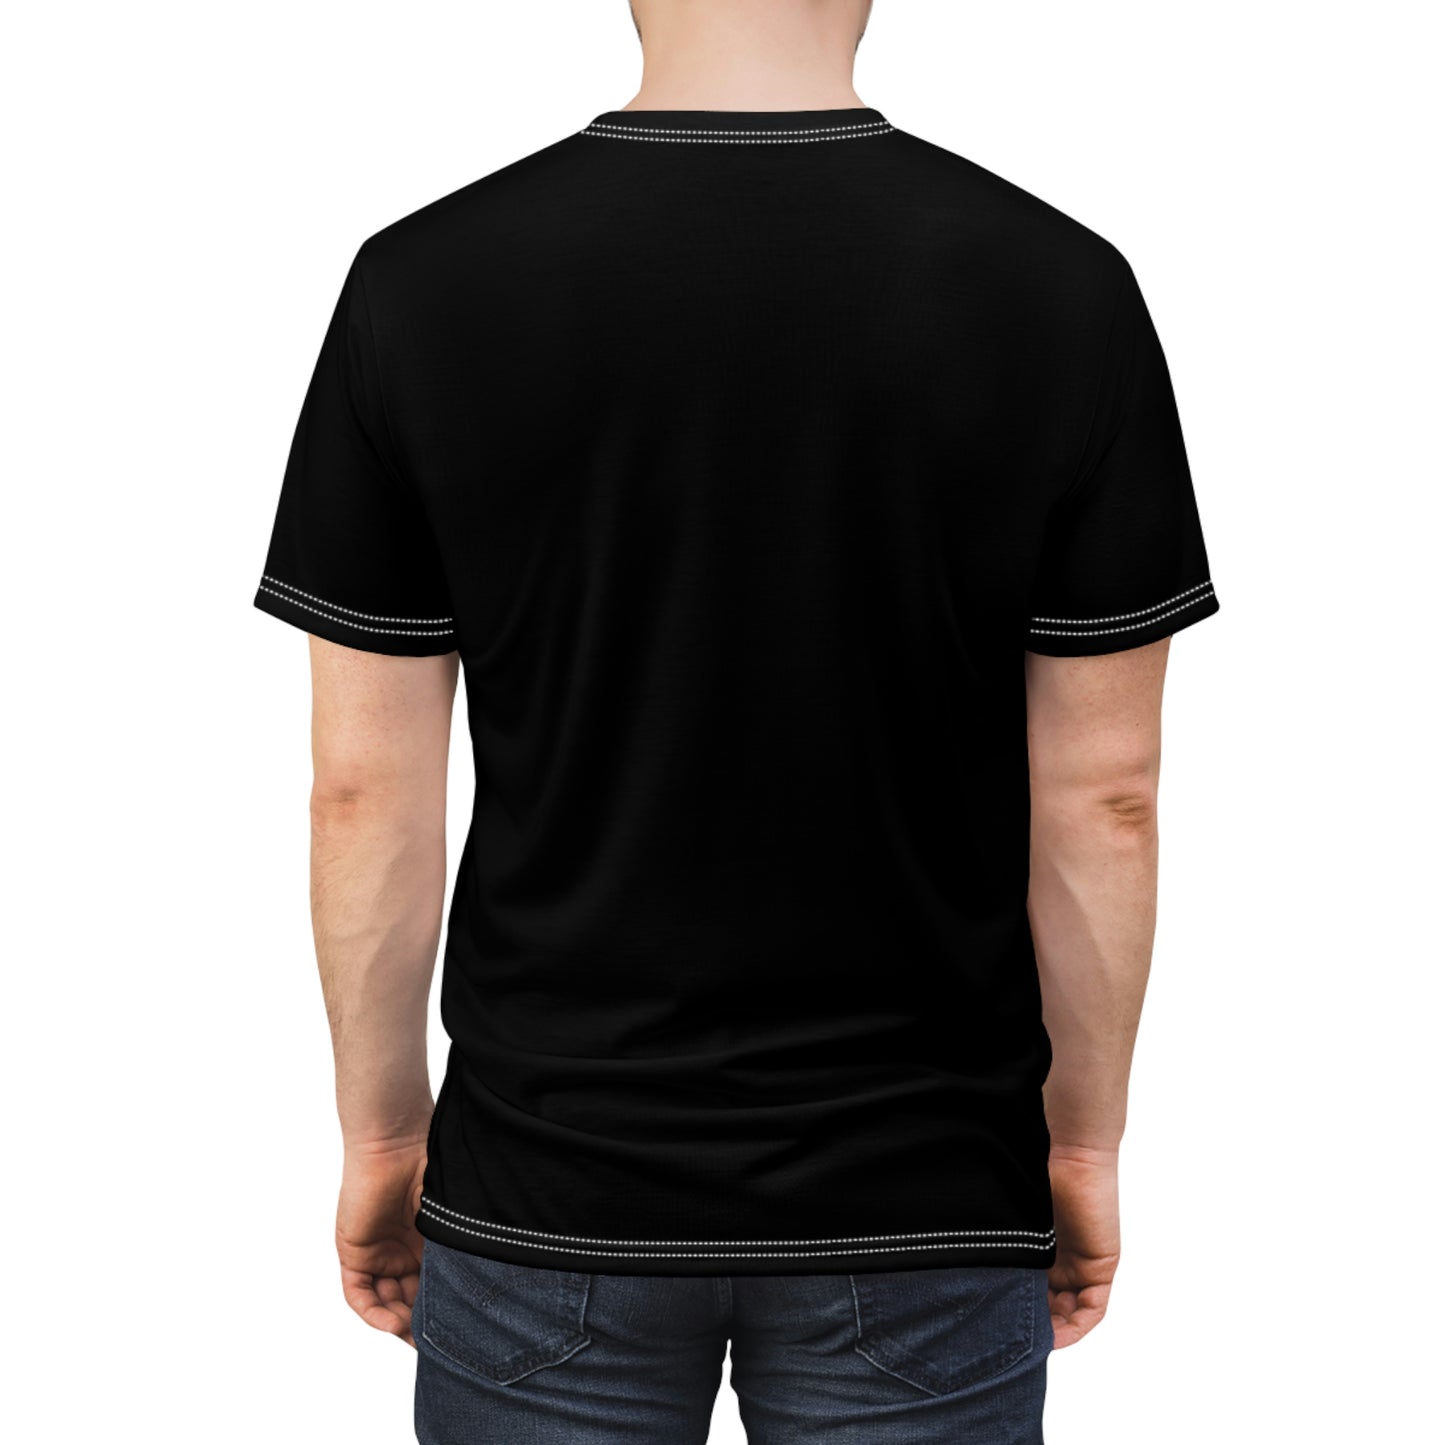 Thalia - The New Generation - Unisex All-Over Print Cut & Sew T-Shirt